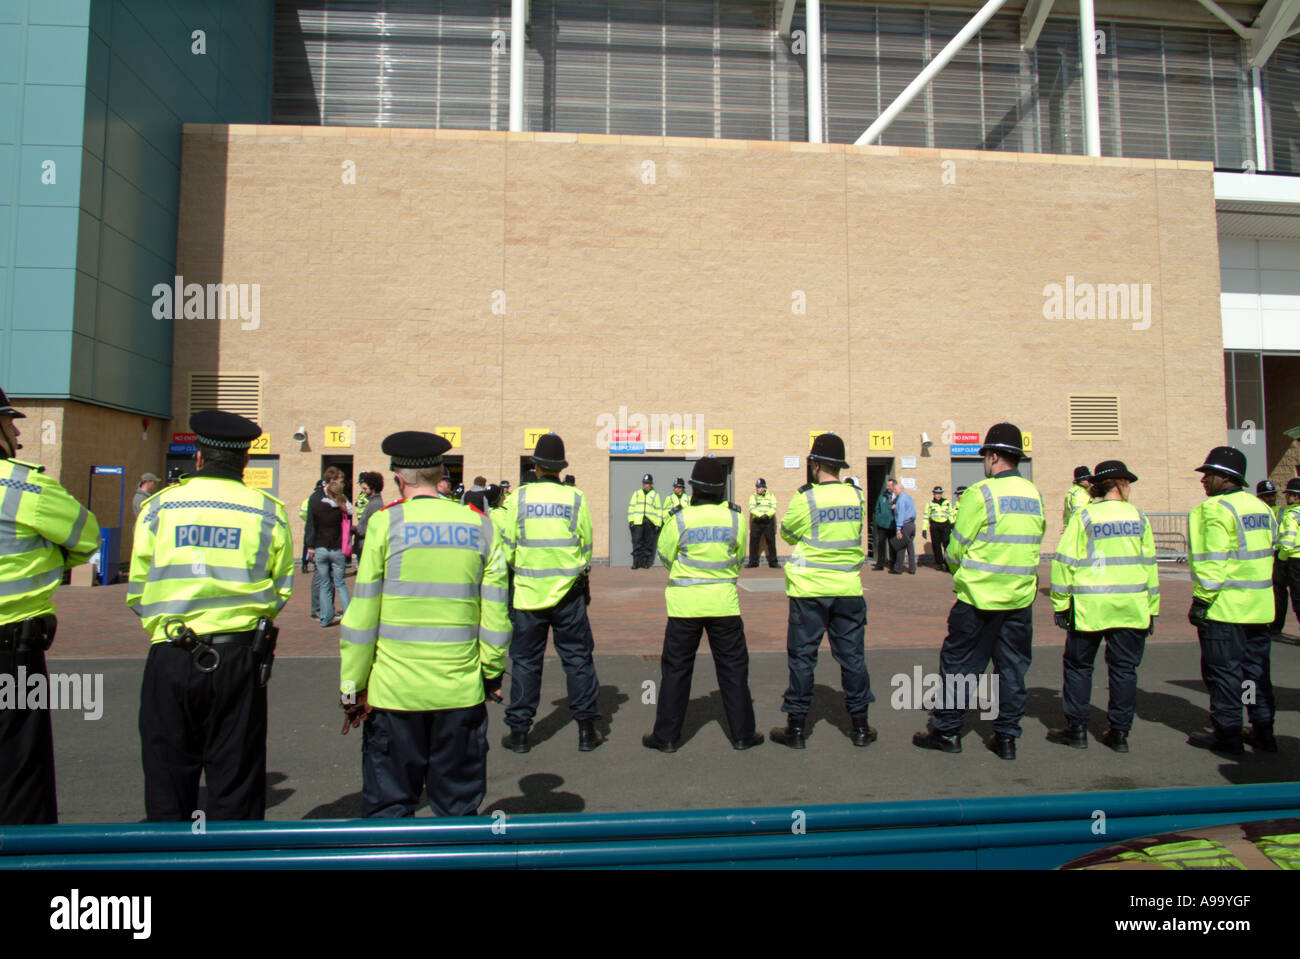 Police presence at football match Stock Photo